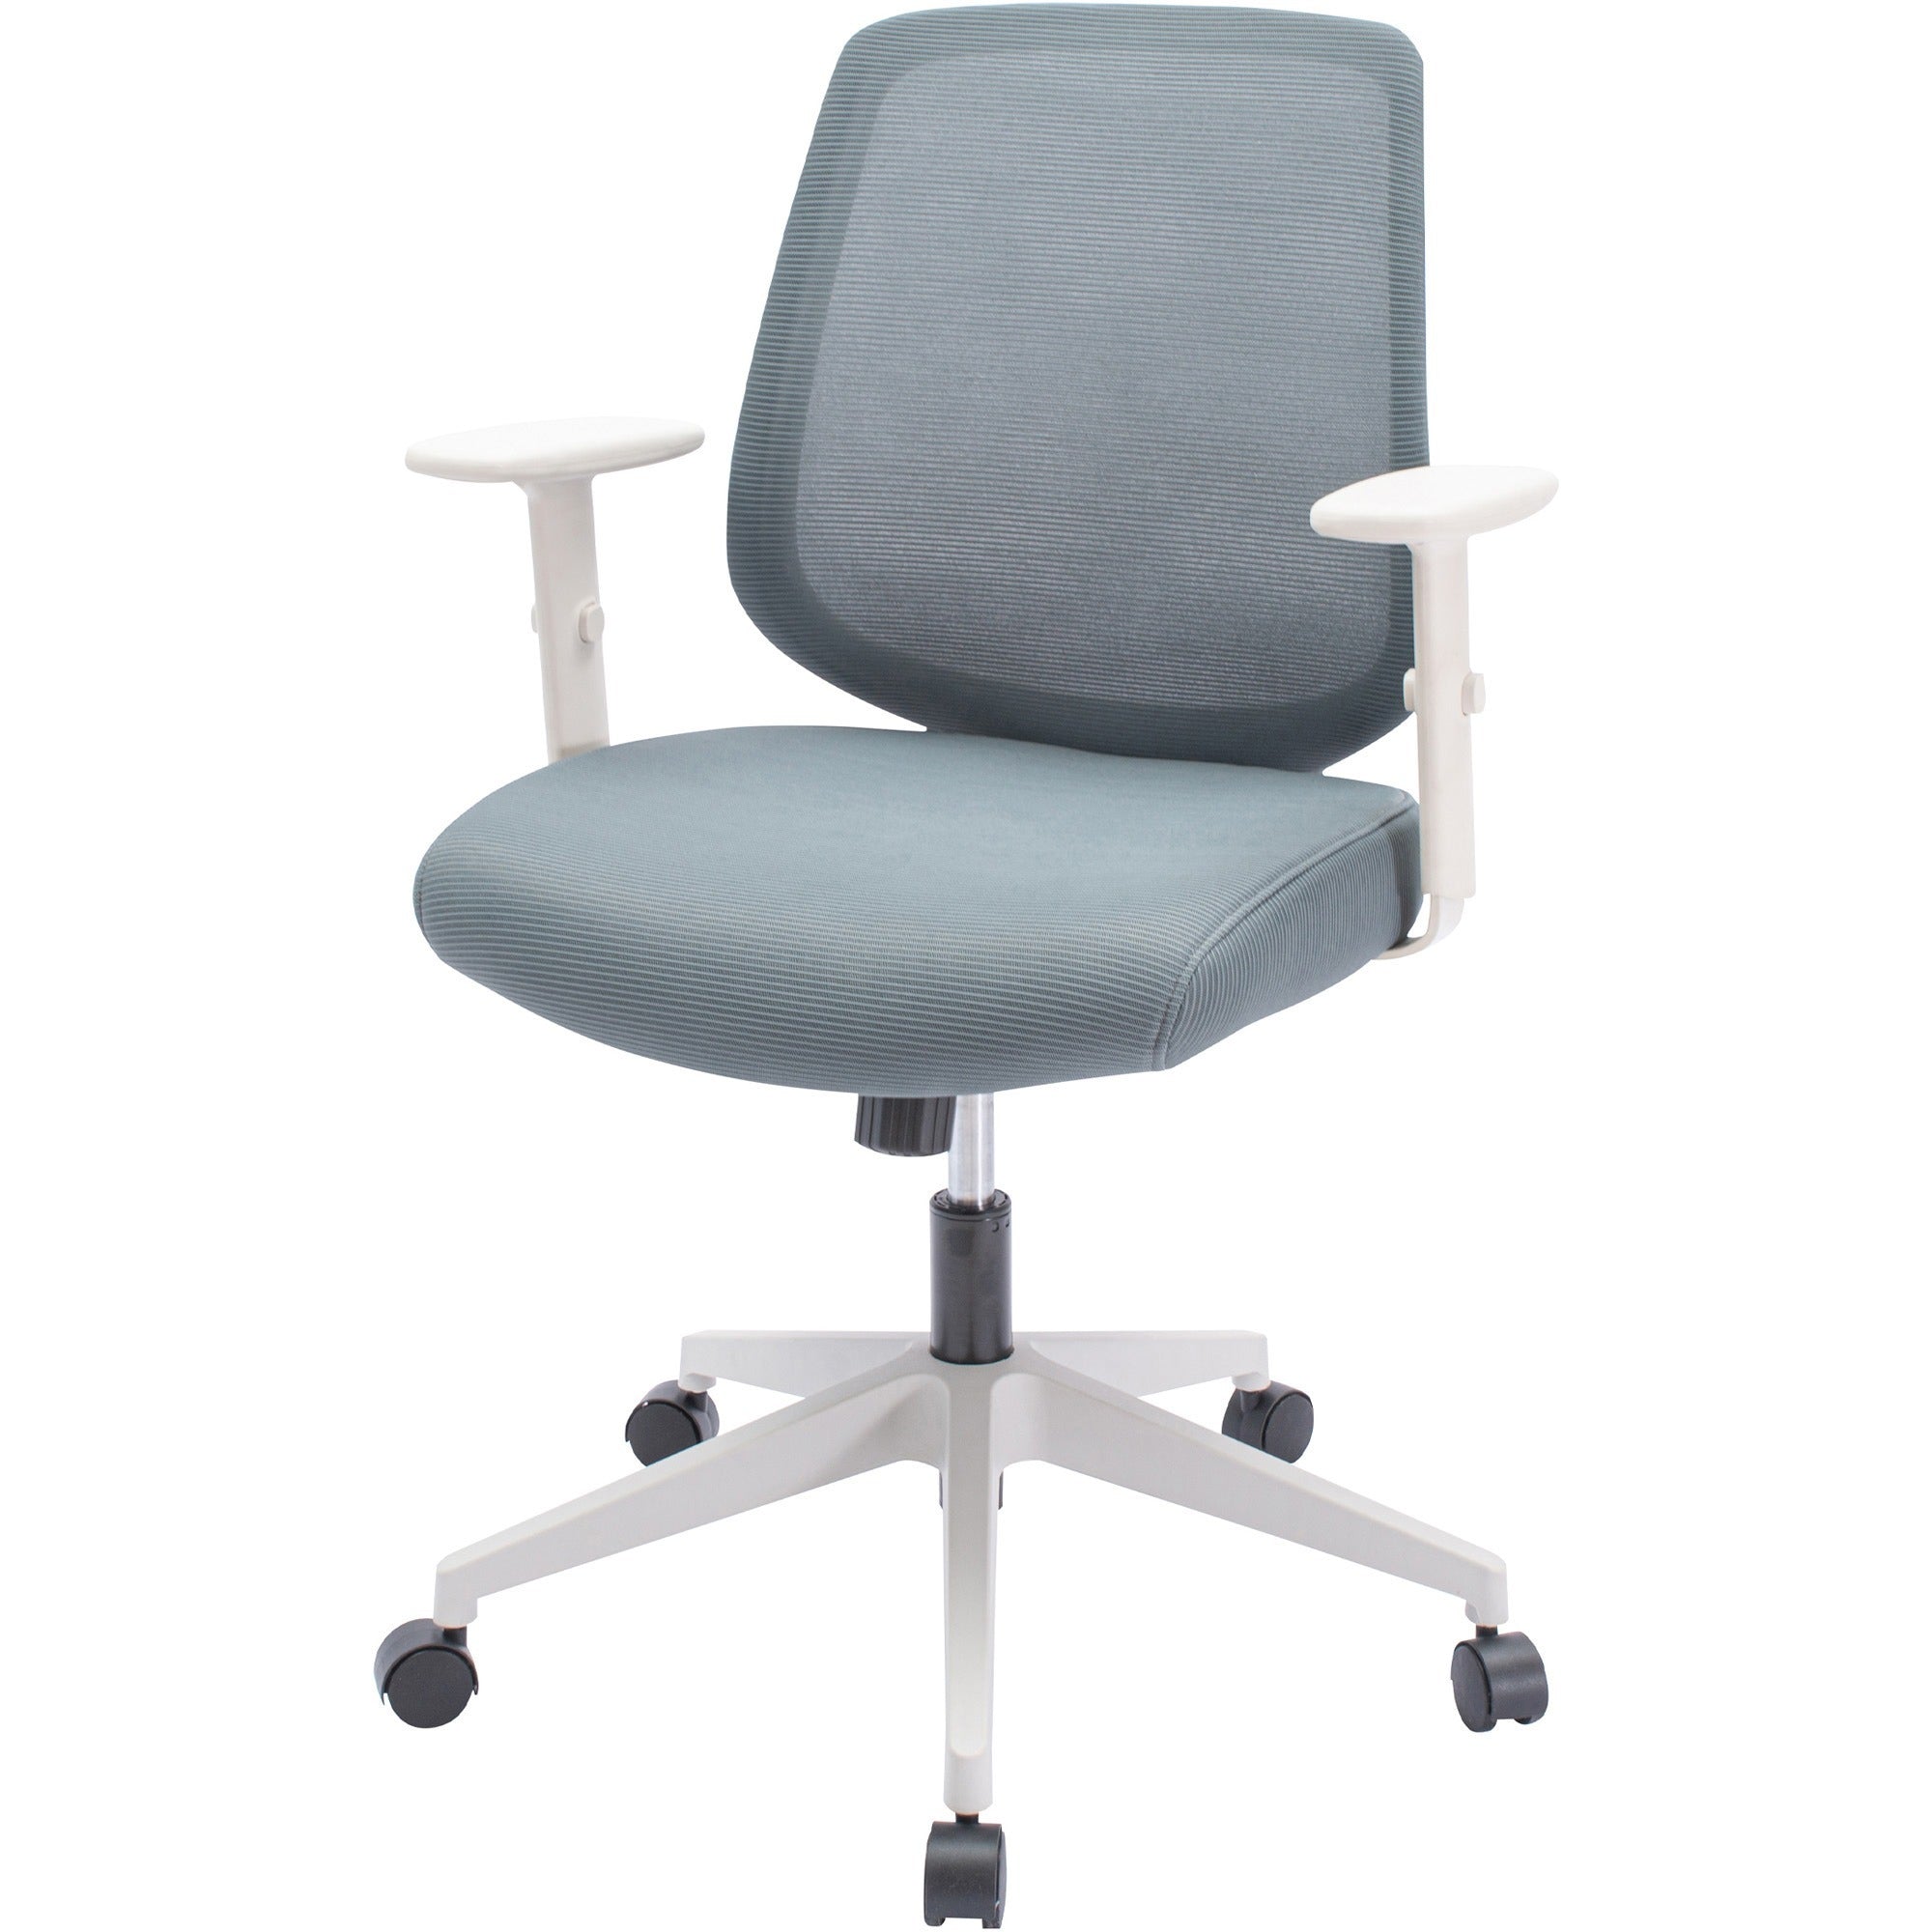 nusparc-mid-back-task-chair-fabric-back-mid-back-5-star-base-gray-armrest-1-each_nprch201magy - 4